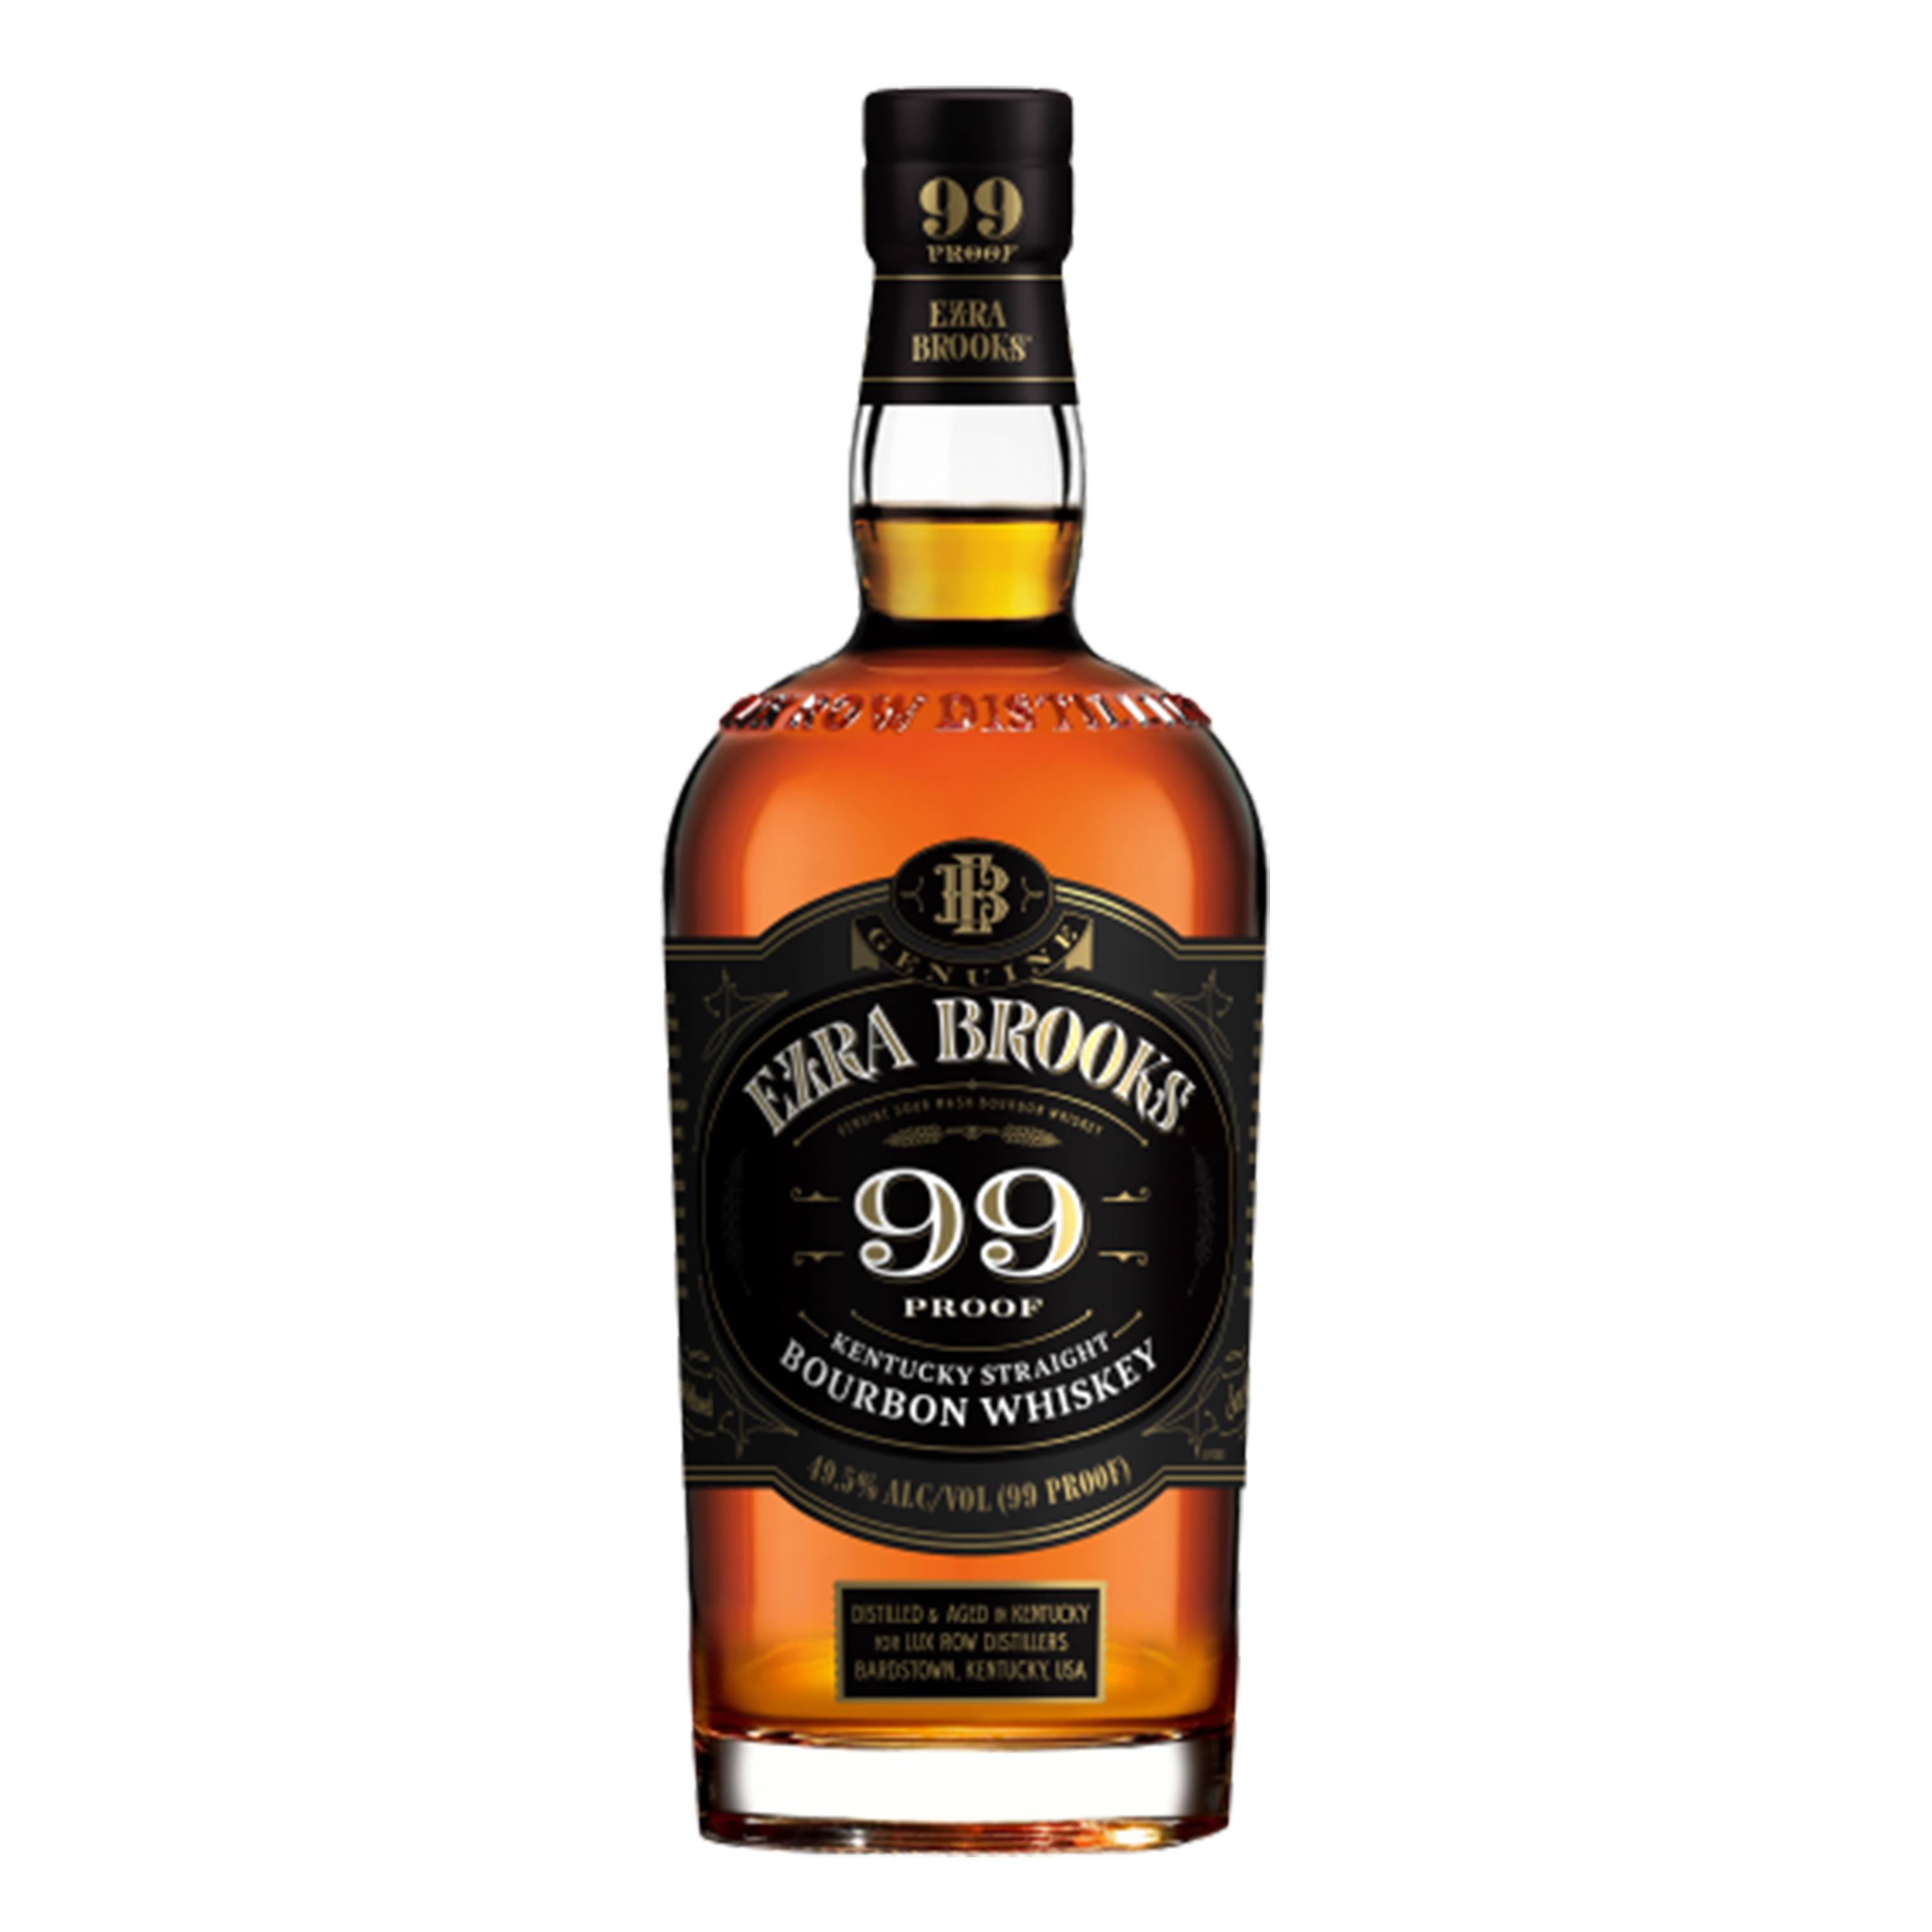 Ezra Brooks 99 Proof Kentucky Straight Bourbon